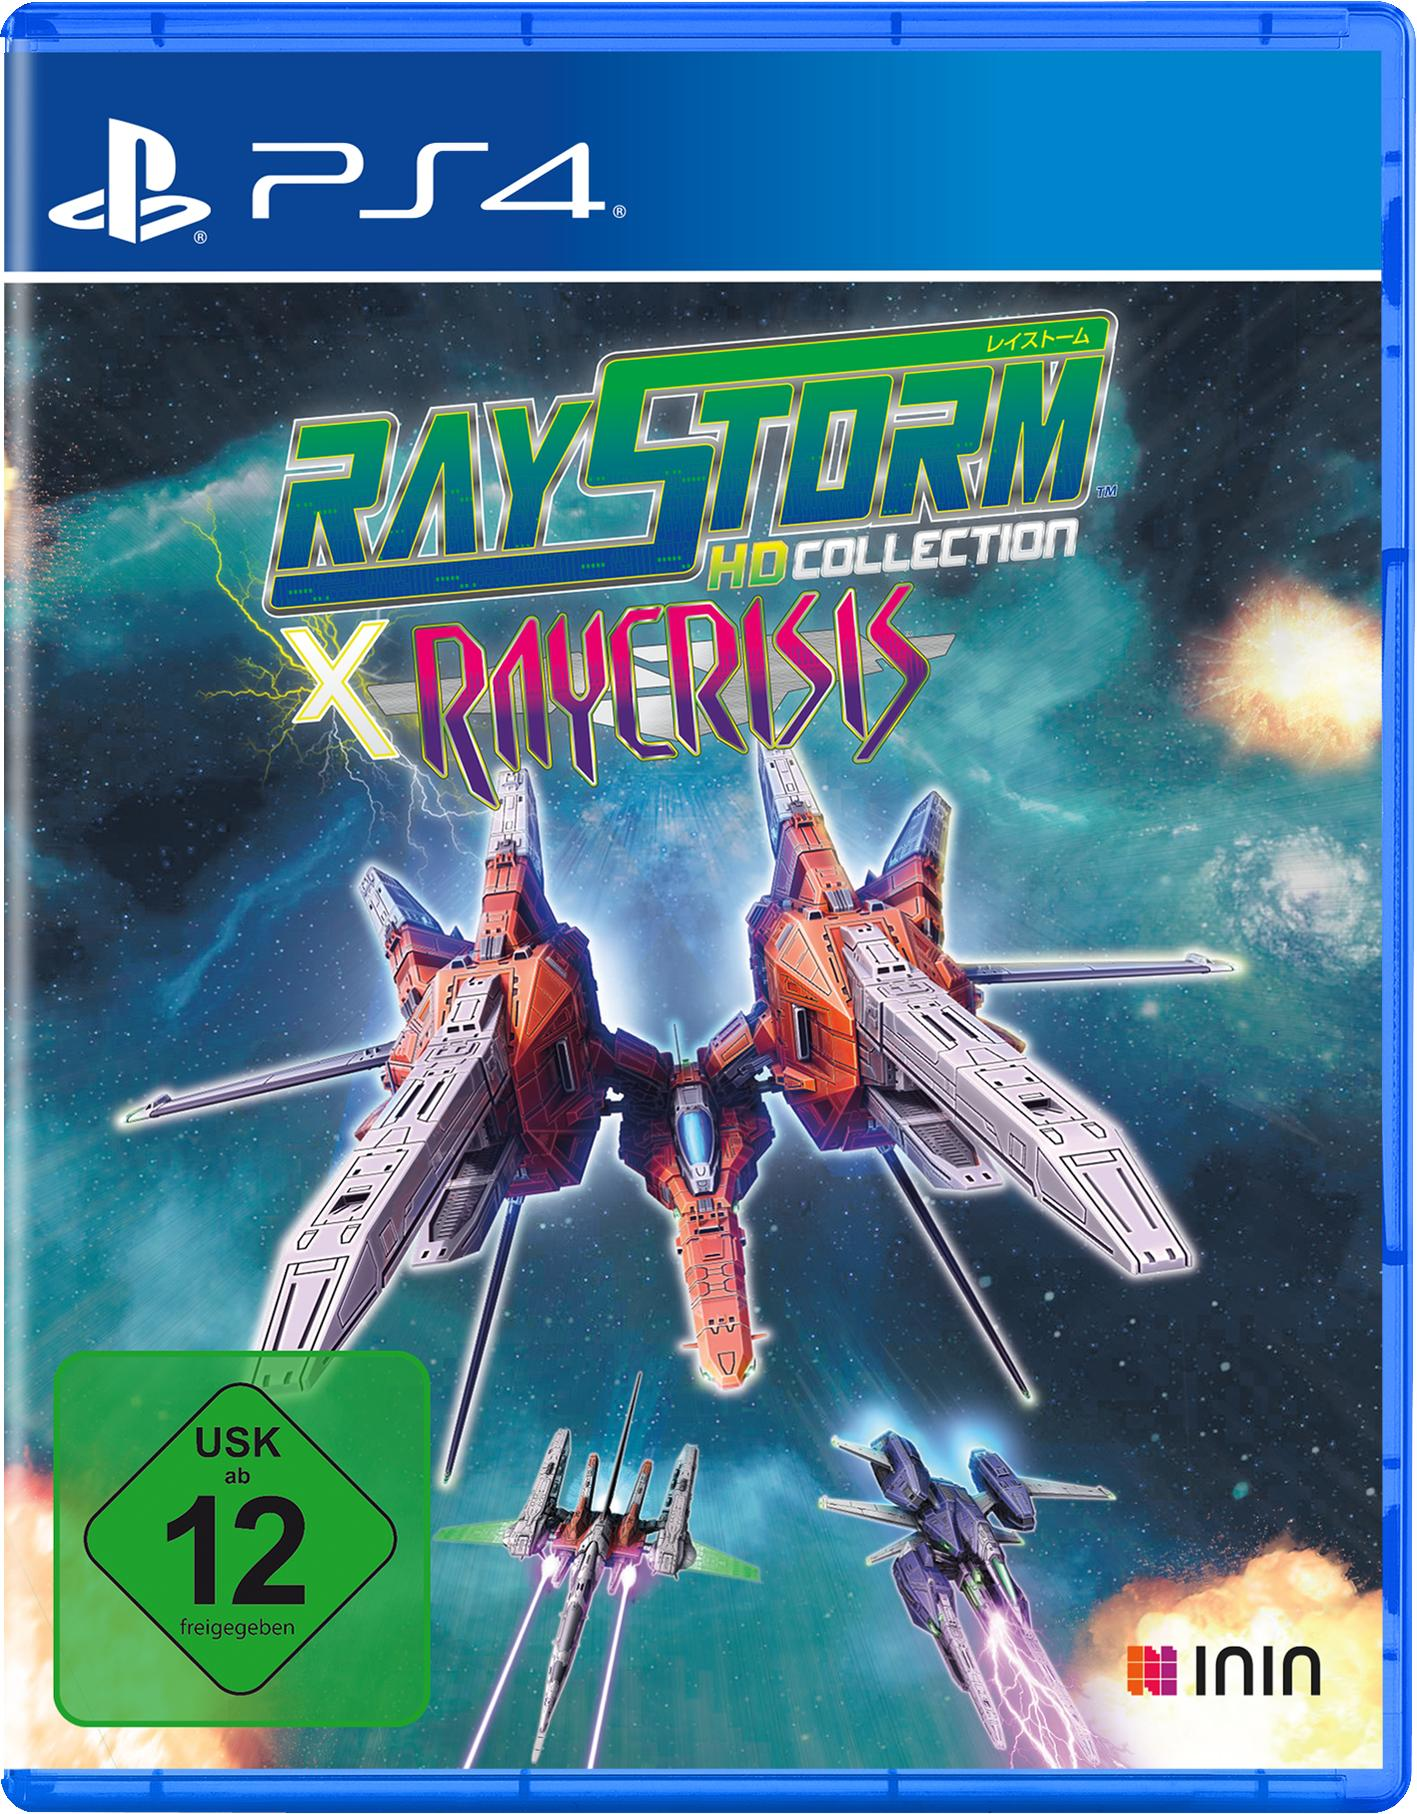 X HD [PlayStation RayCrisis RayStorm - 4] Collection